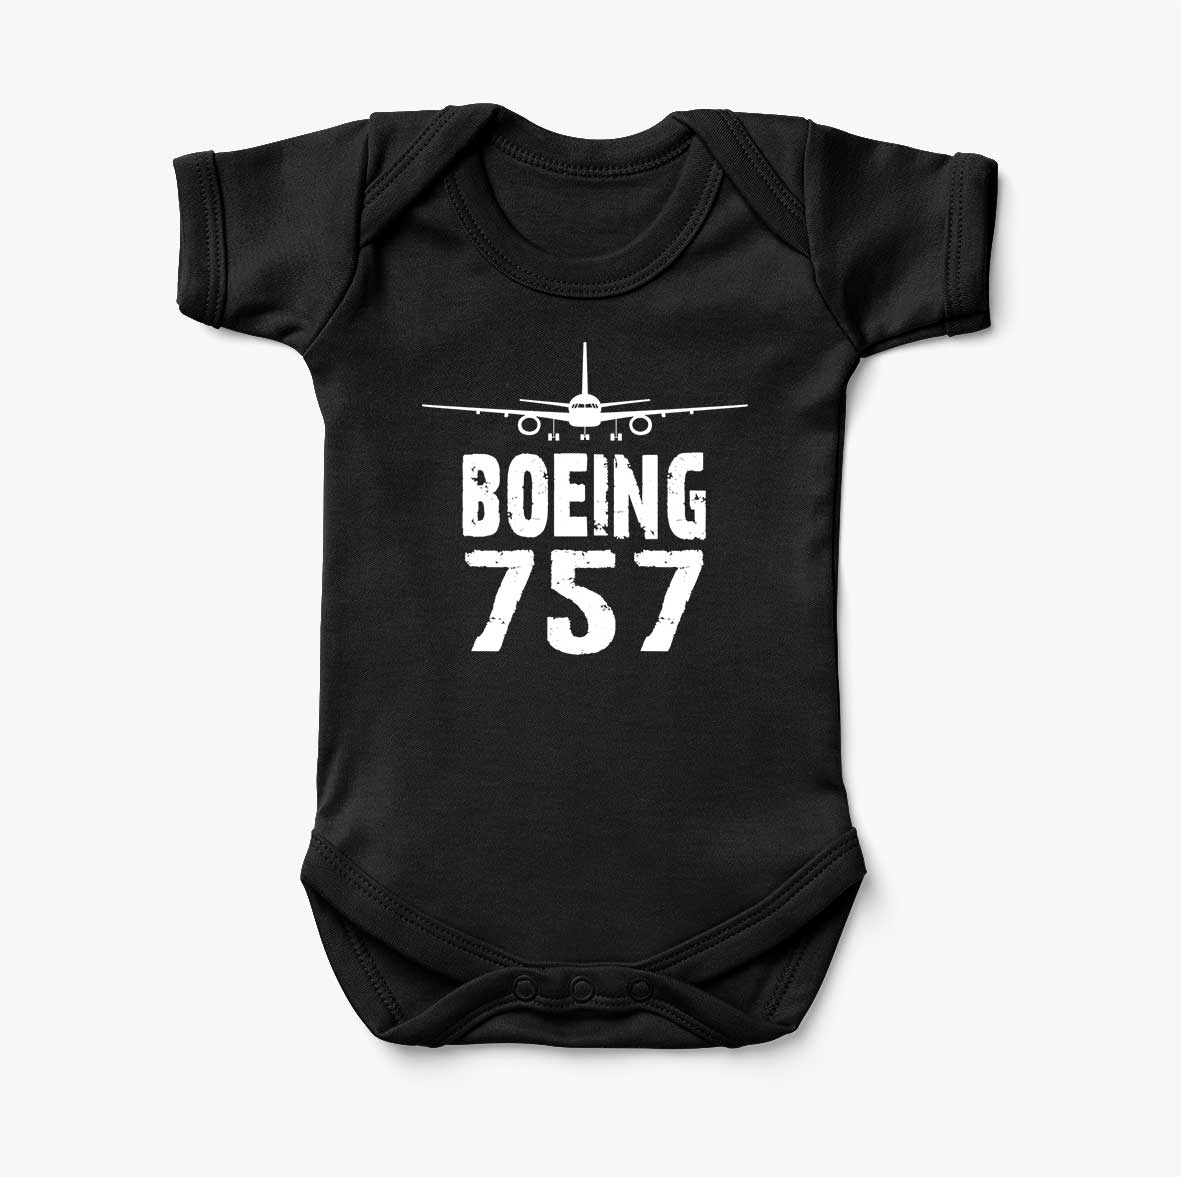 Boeing 757 & Plane Designed Baby Bodysuits